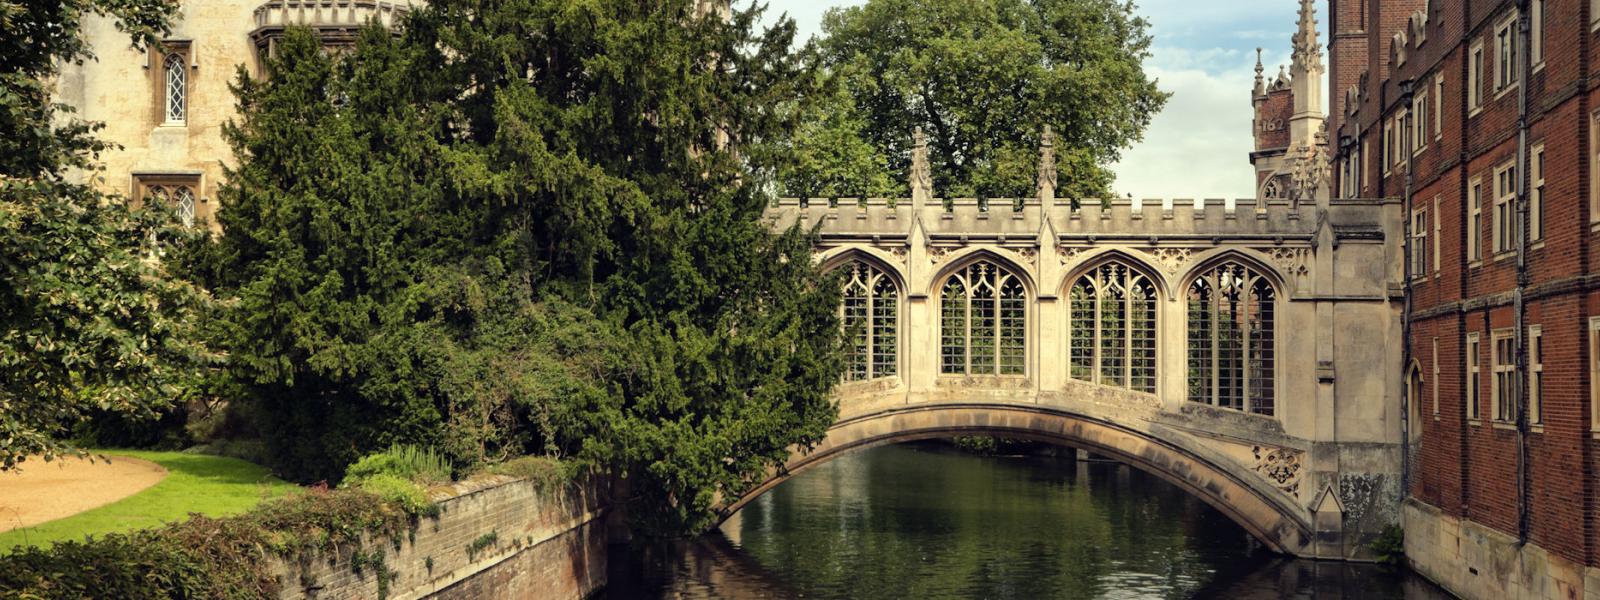 The Bridge of Sigh at Saint John's College, Cambridge.